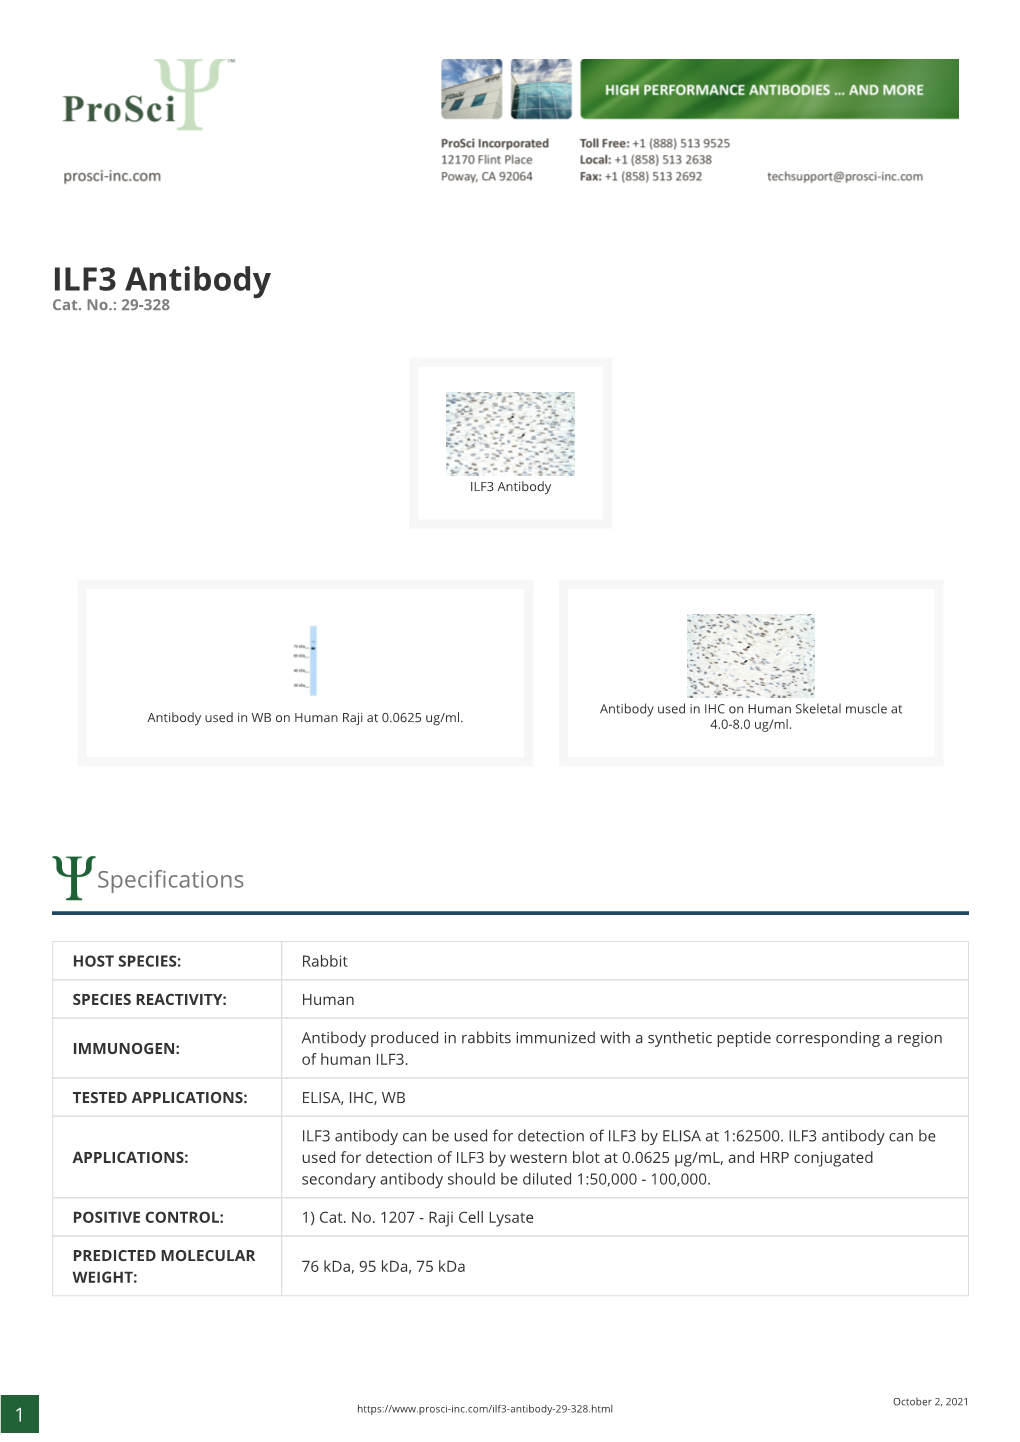 ILF3 Antibody Cat